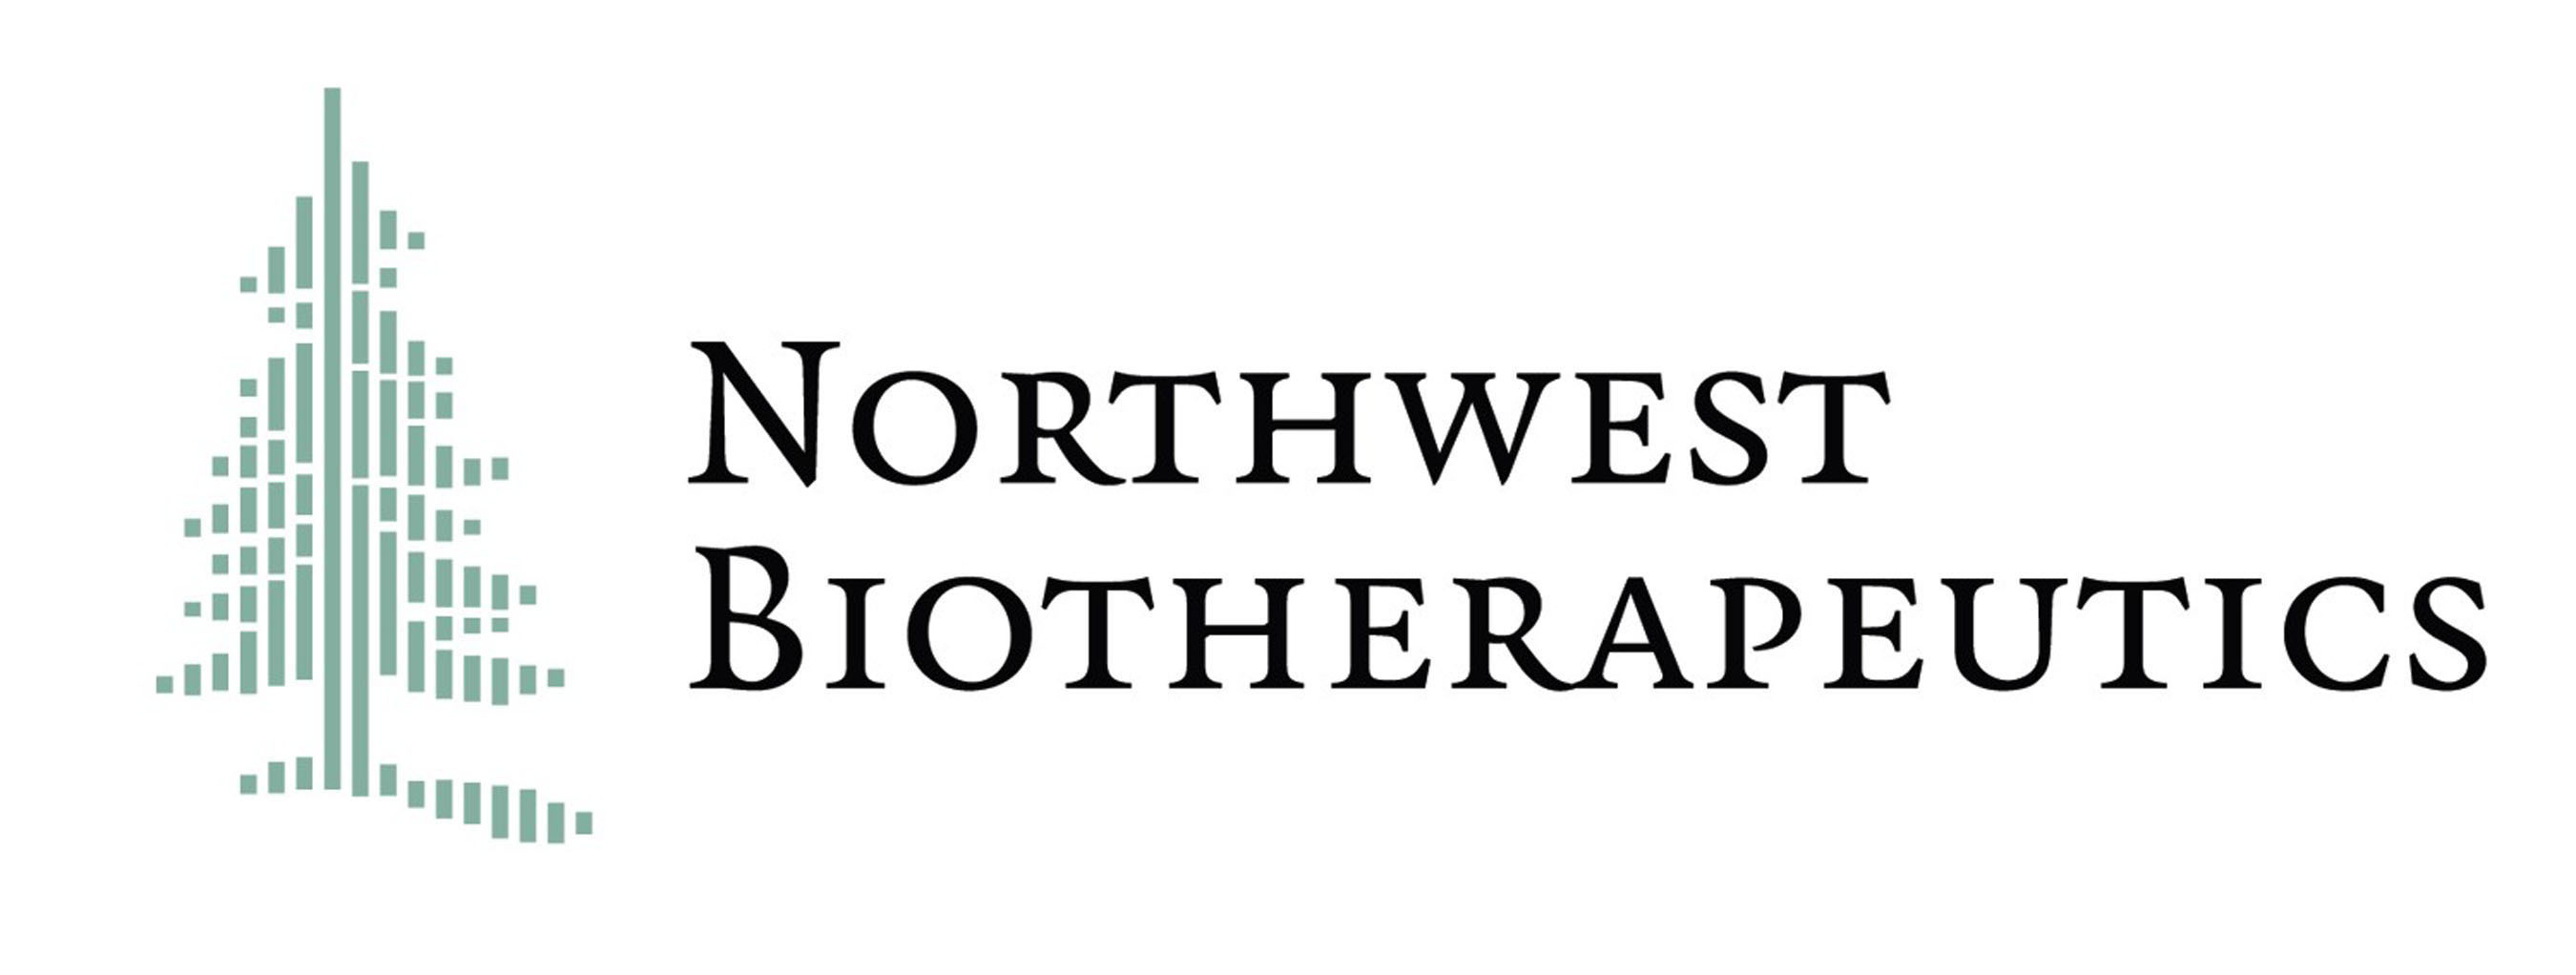 Northwest Biotherapeutics Logo. (PRNewsFoto/Northwest Biotherapeutics, Inc.) (PRNewsFoto/)